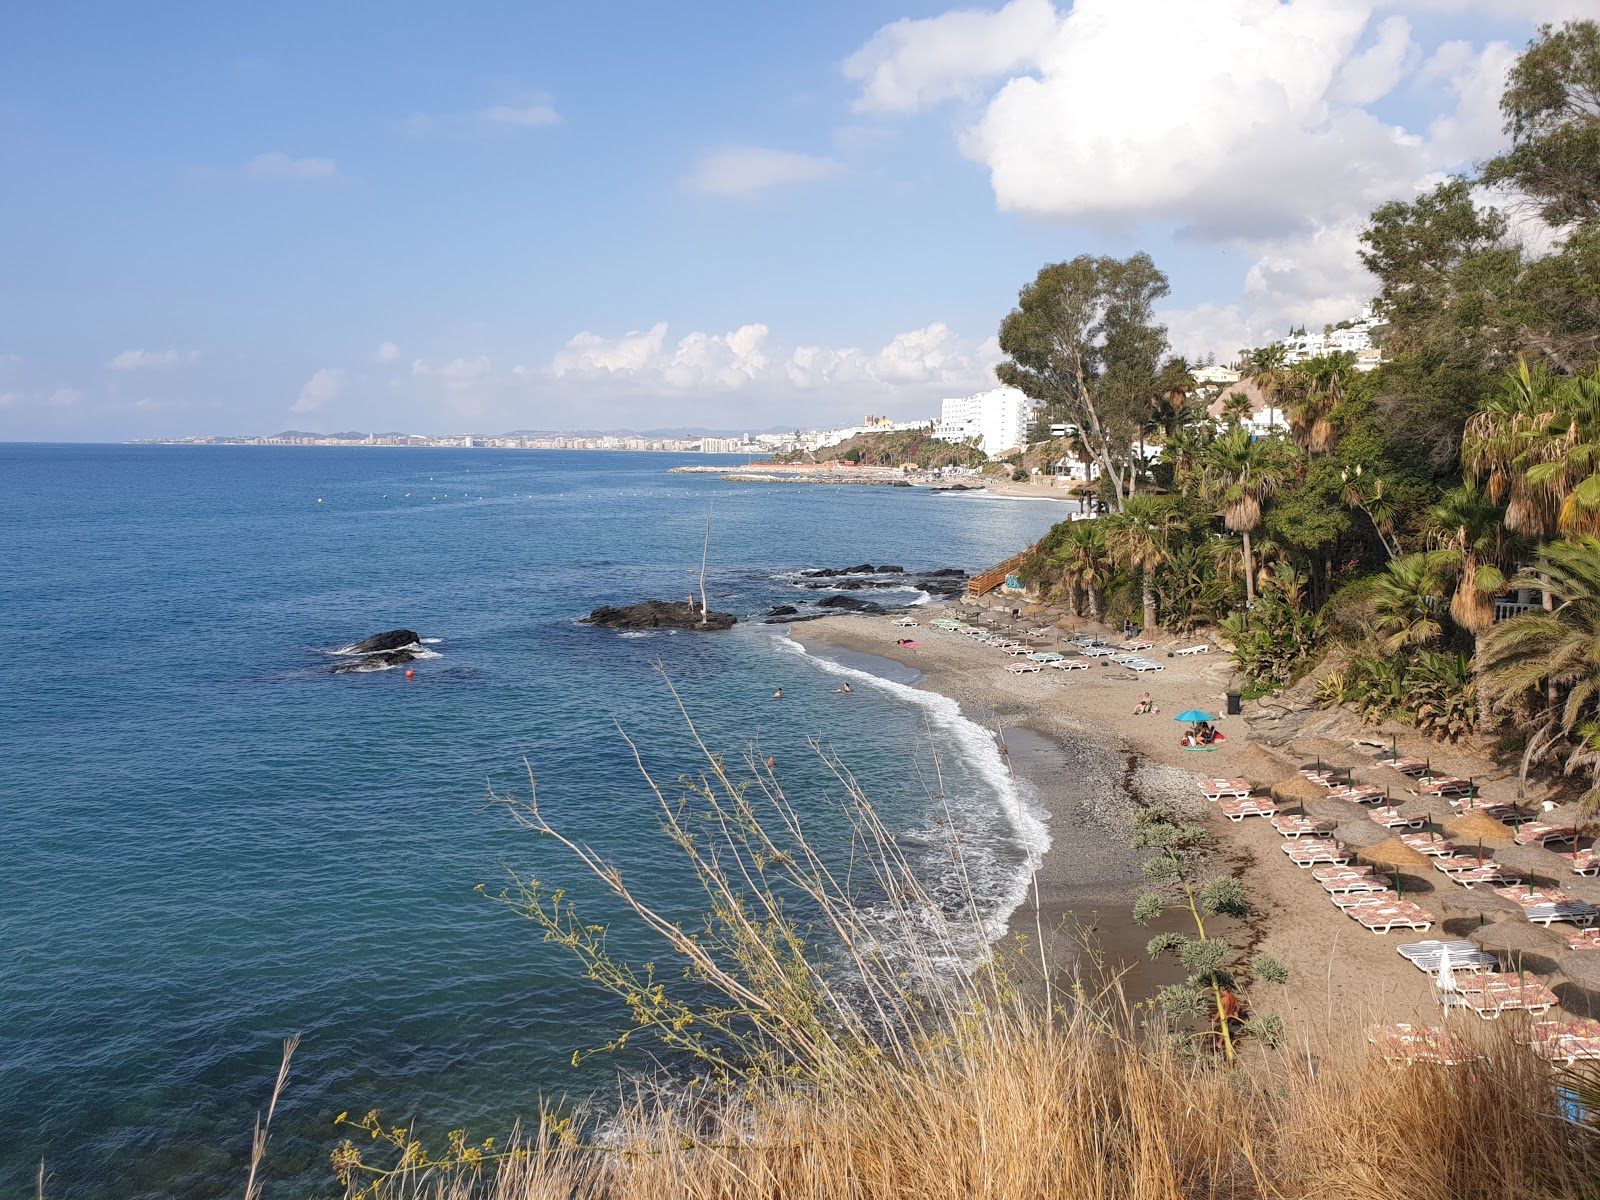 Foto de Playa de la Viborilla com alto nível de limpeza